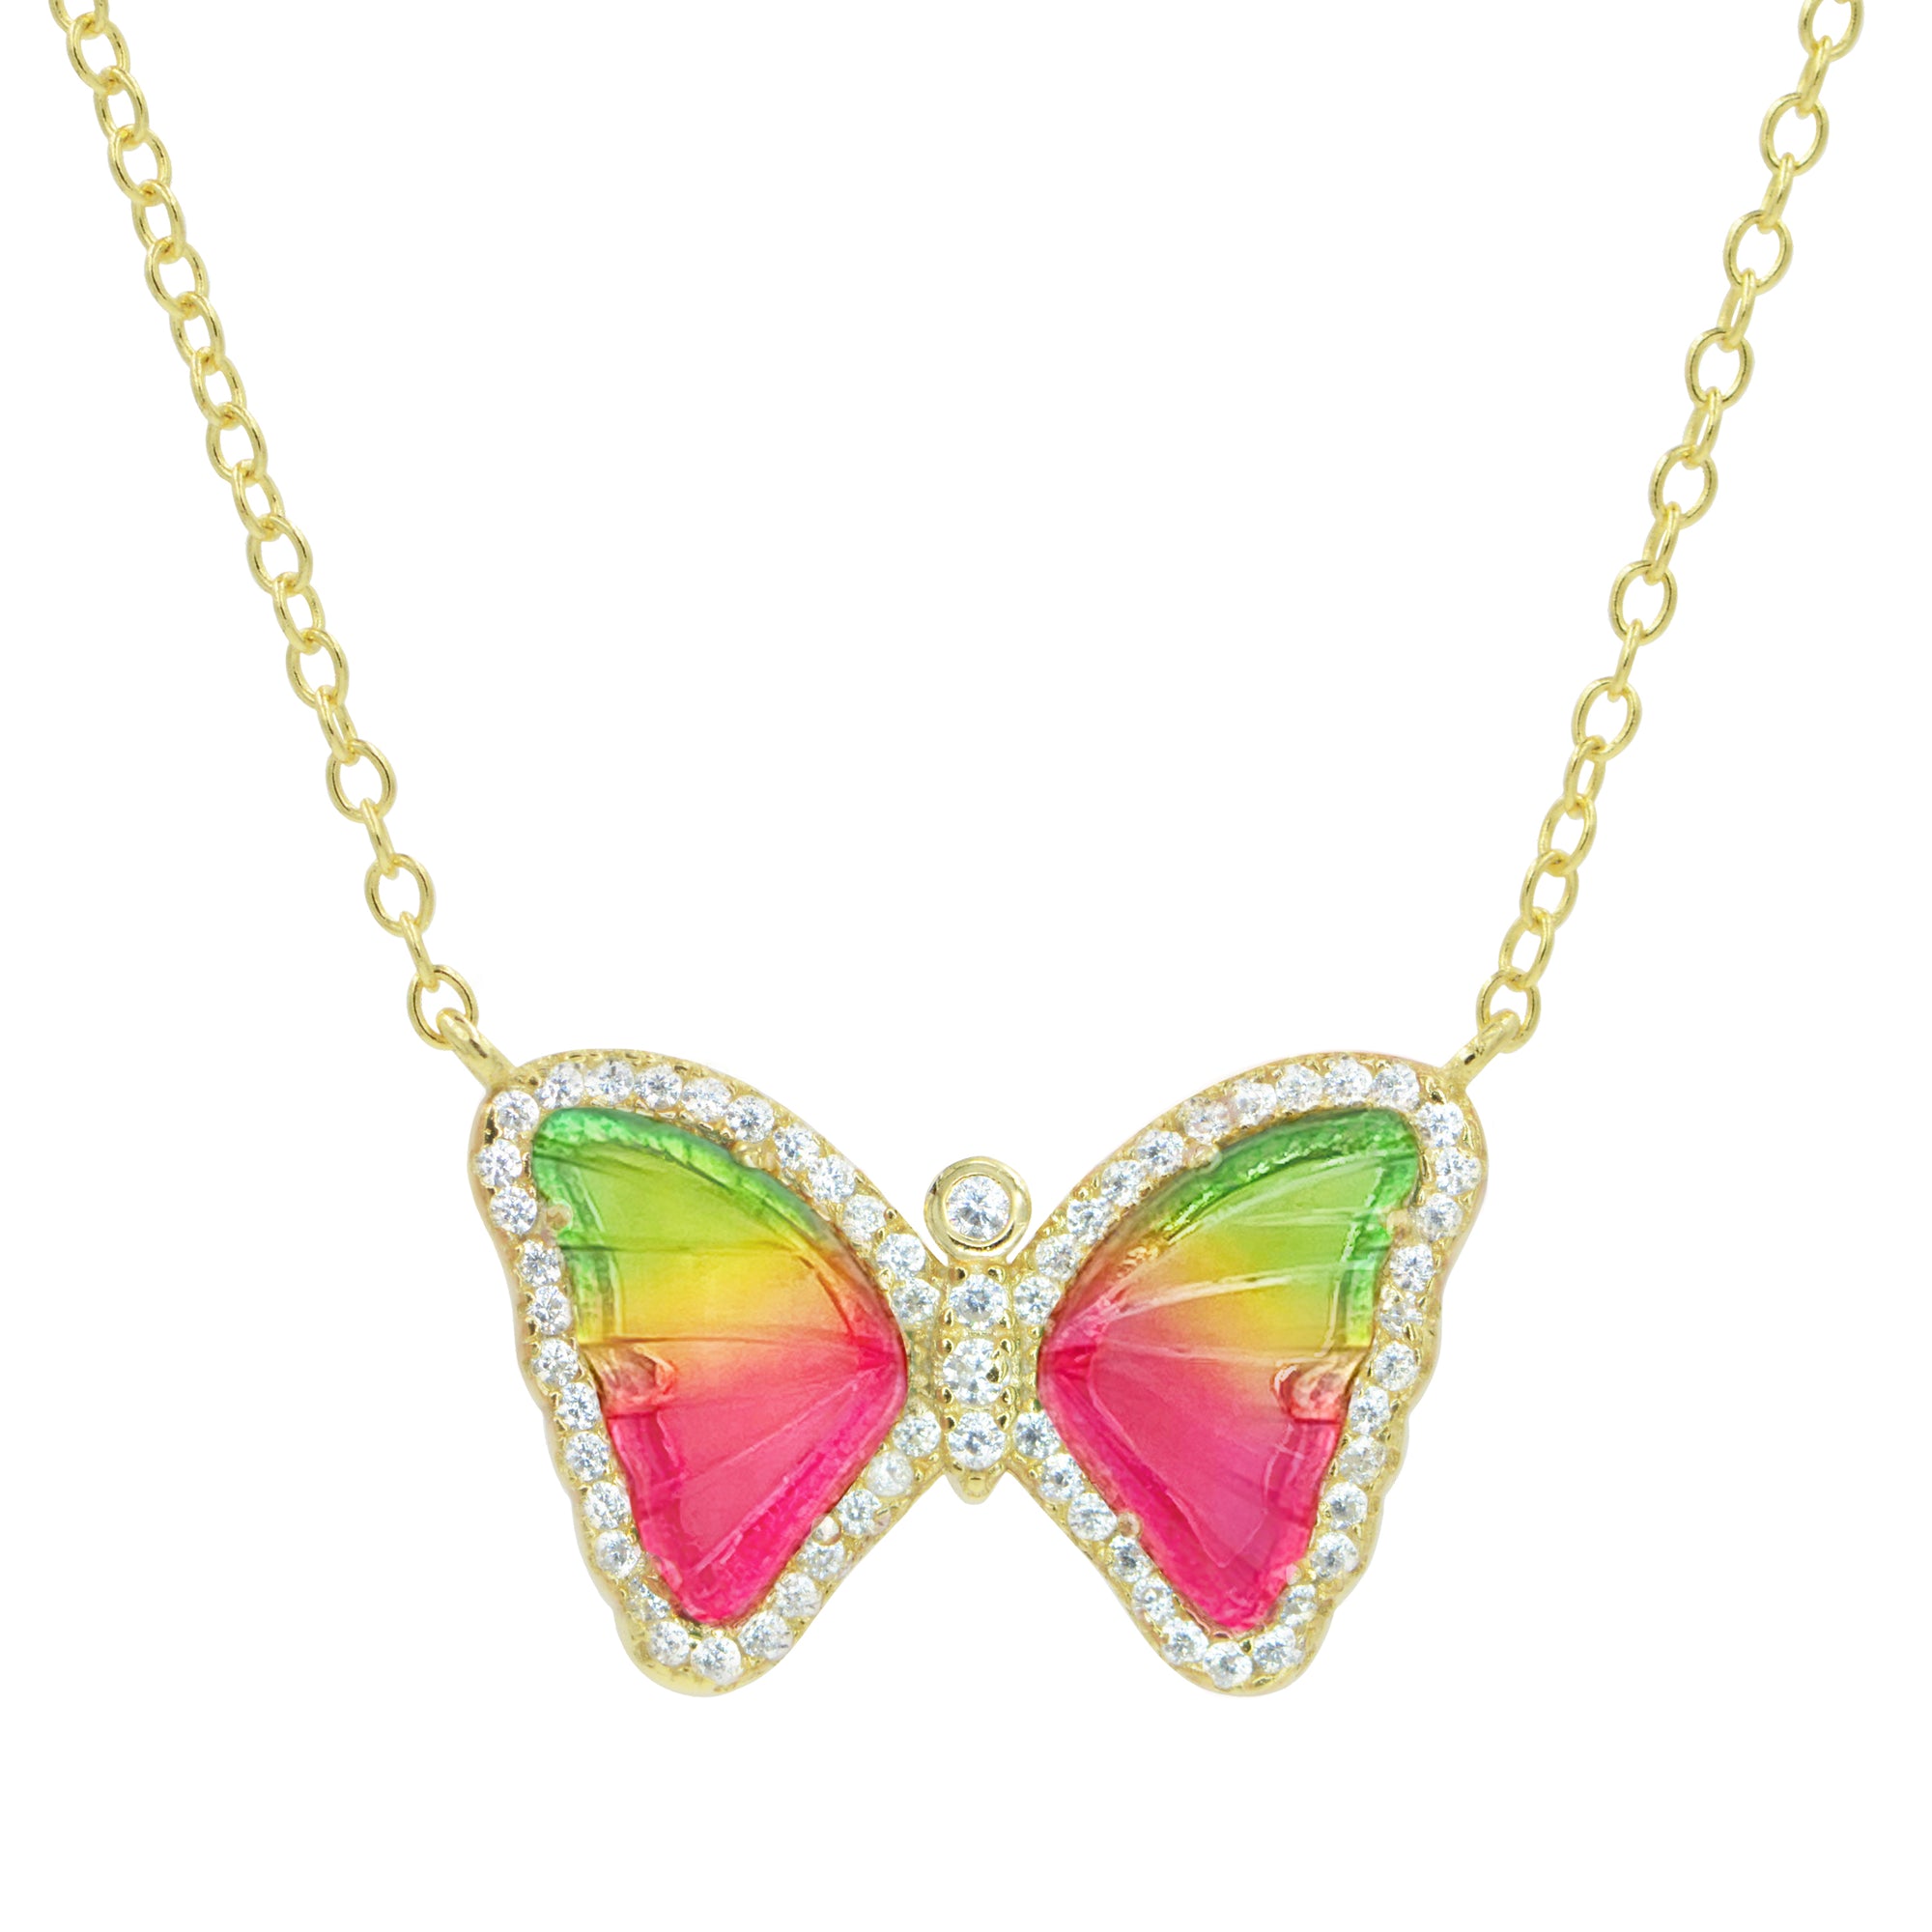 mini gemstone butterfly necklace in watermelon tourmaline